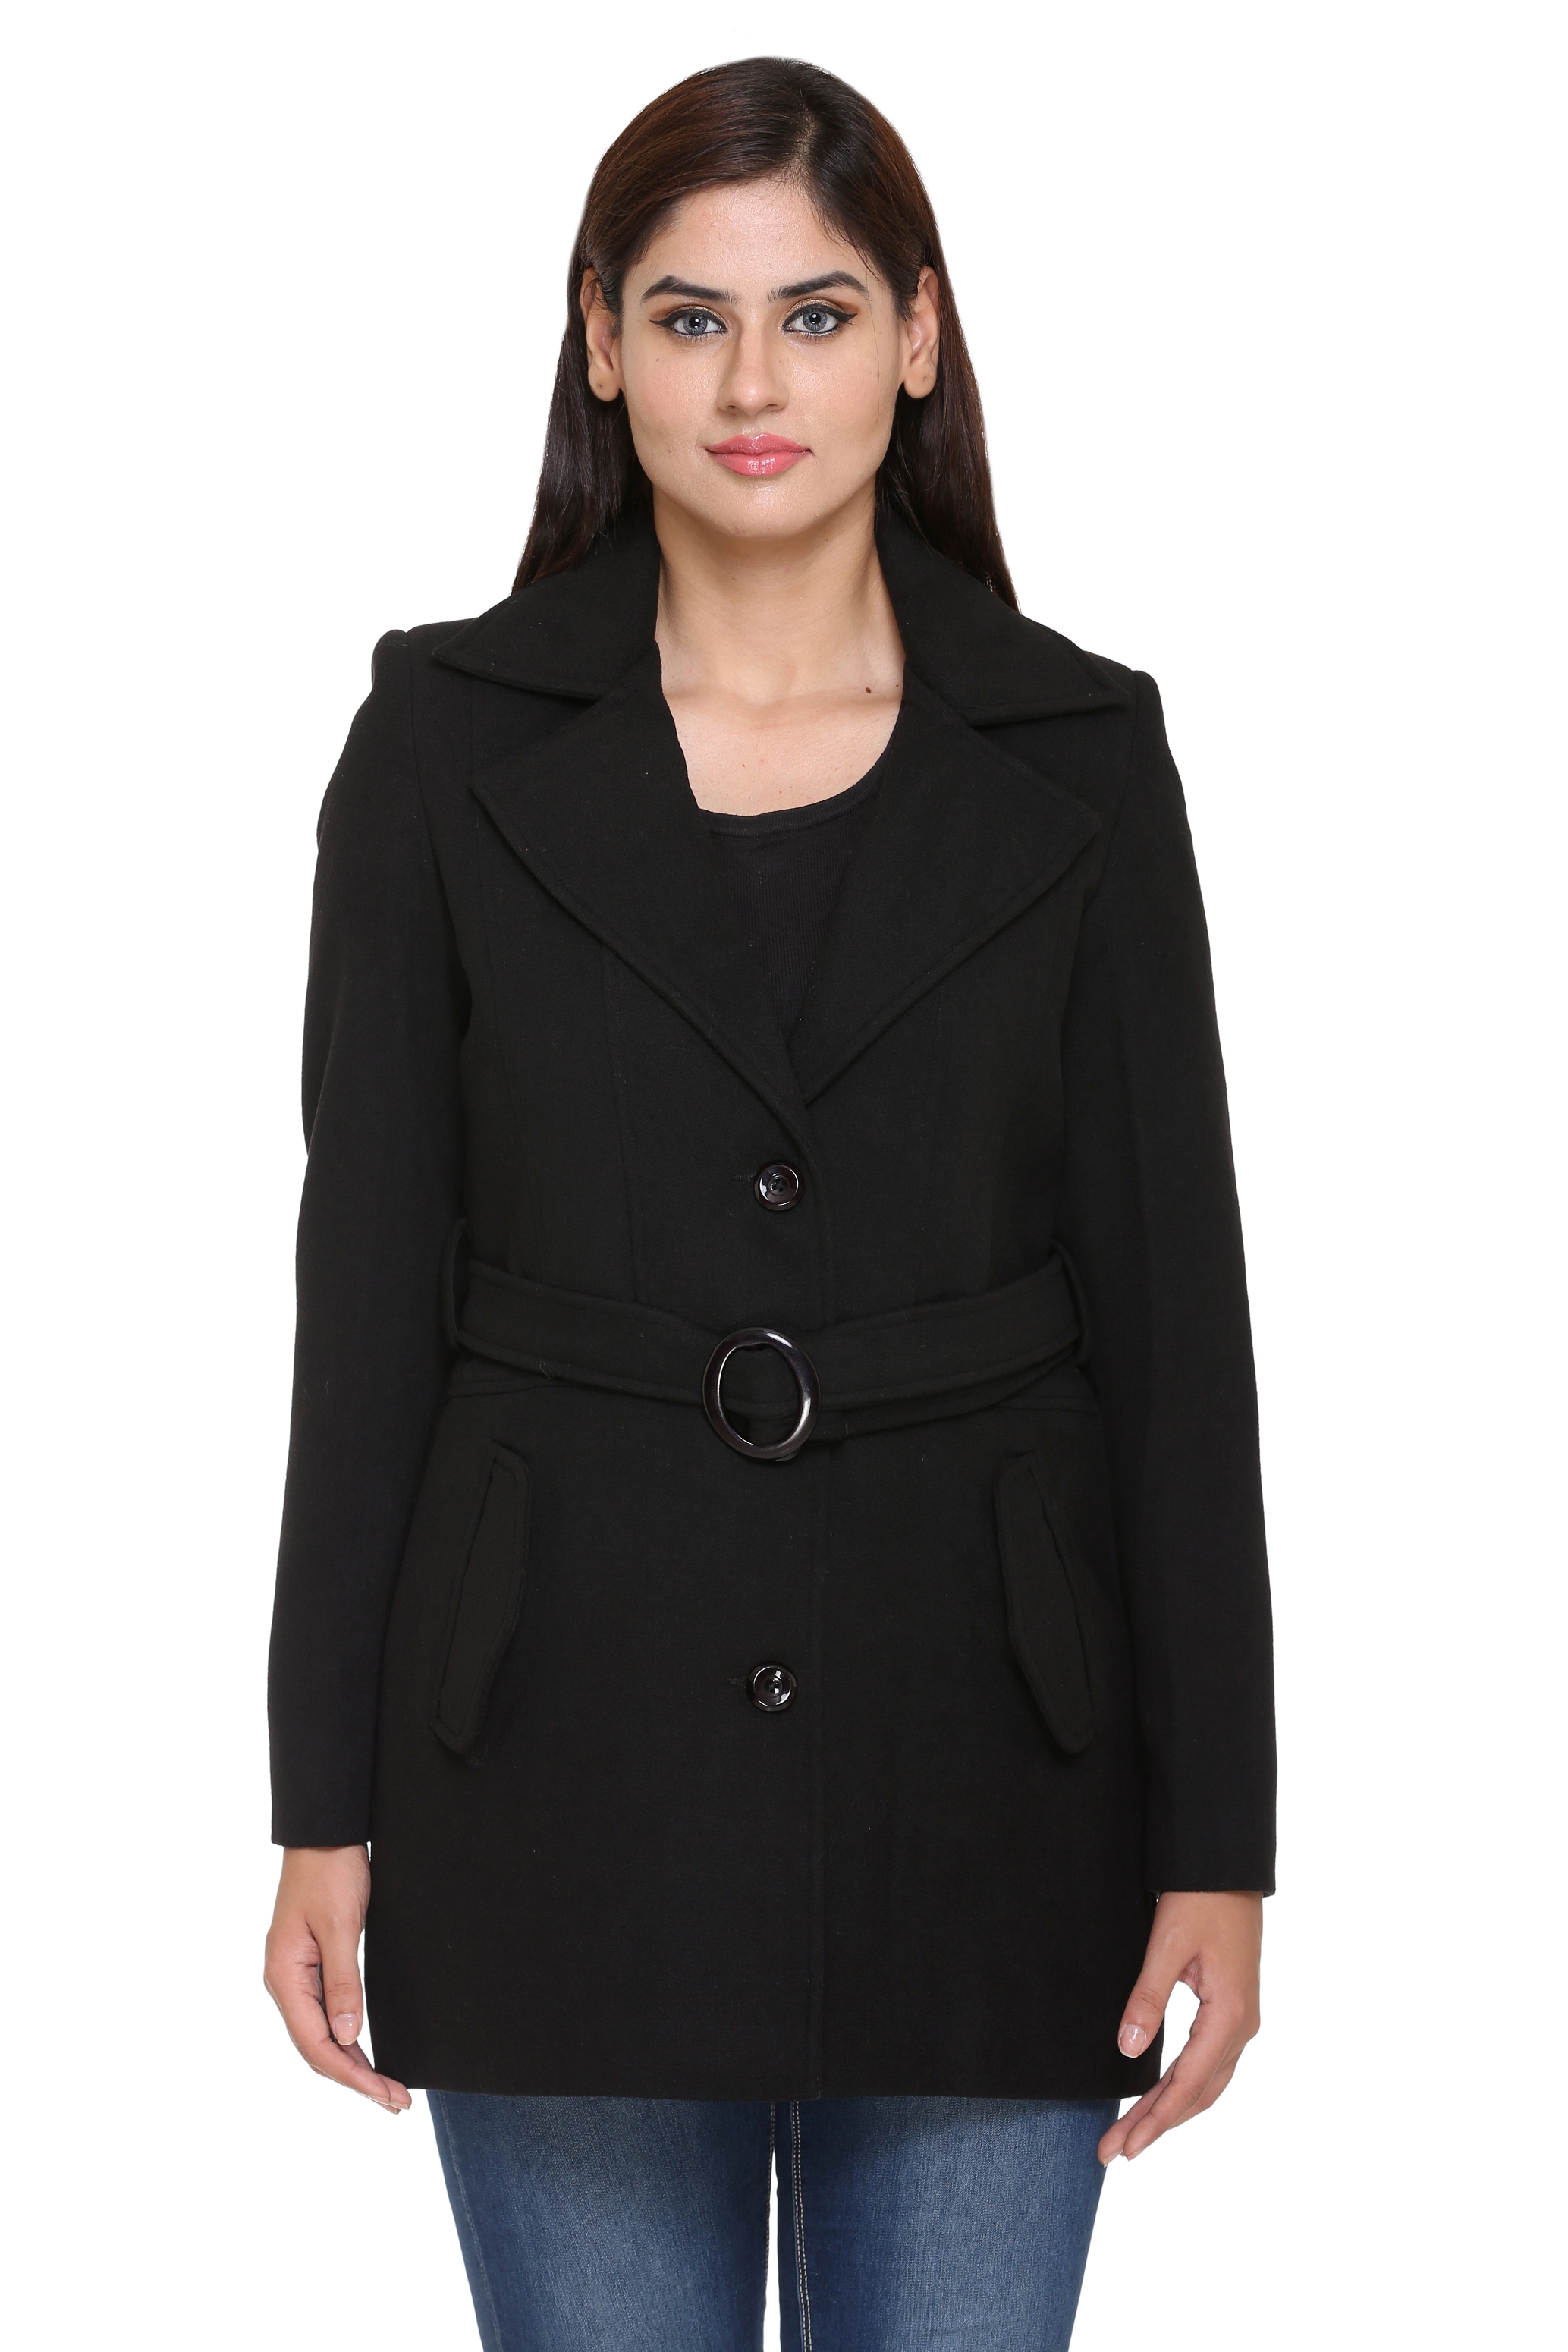 Buy Trufit Black Wool Blend Long Coats For Women Online @ ₹2659 from ...